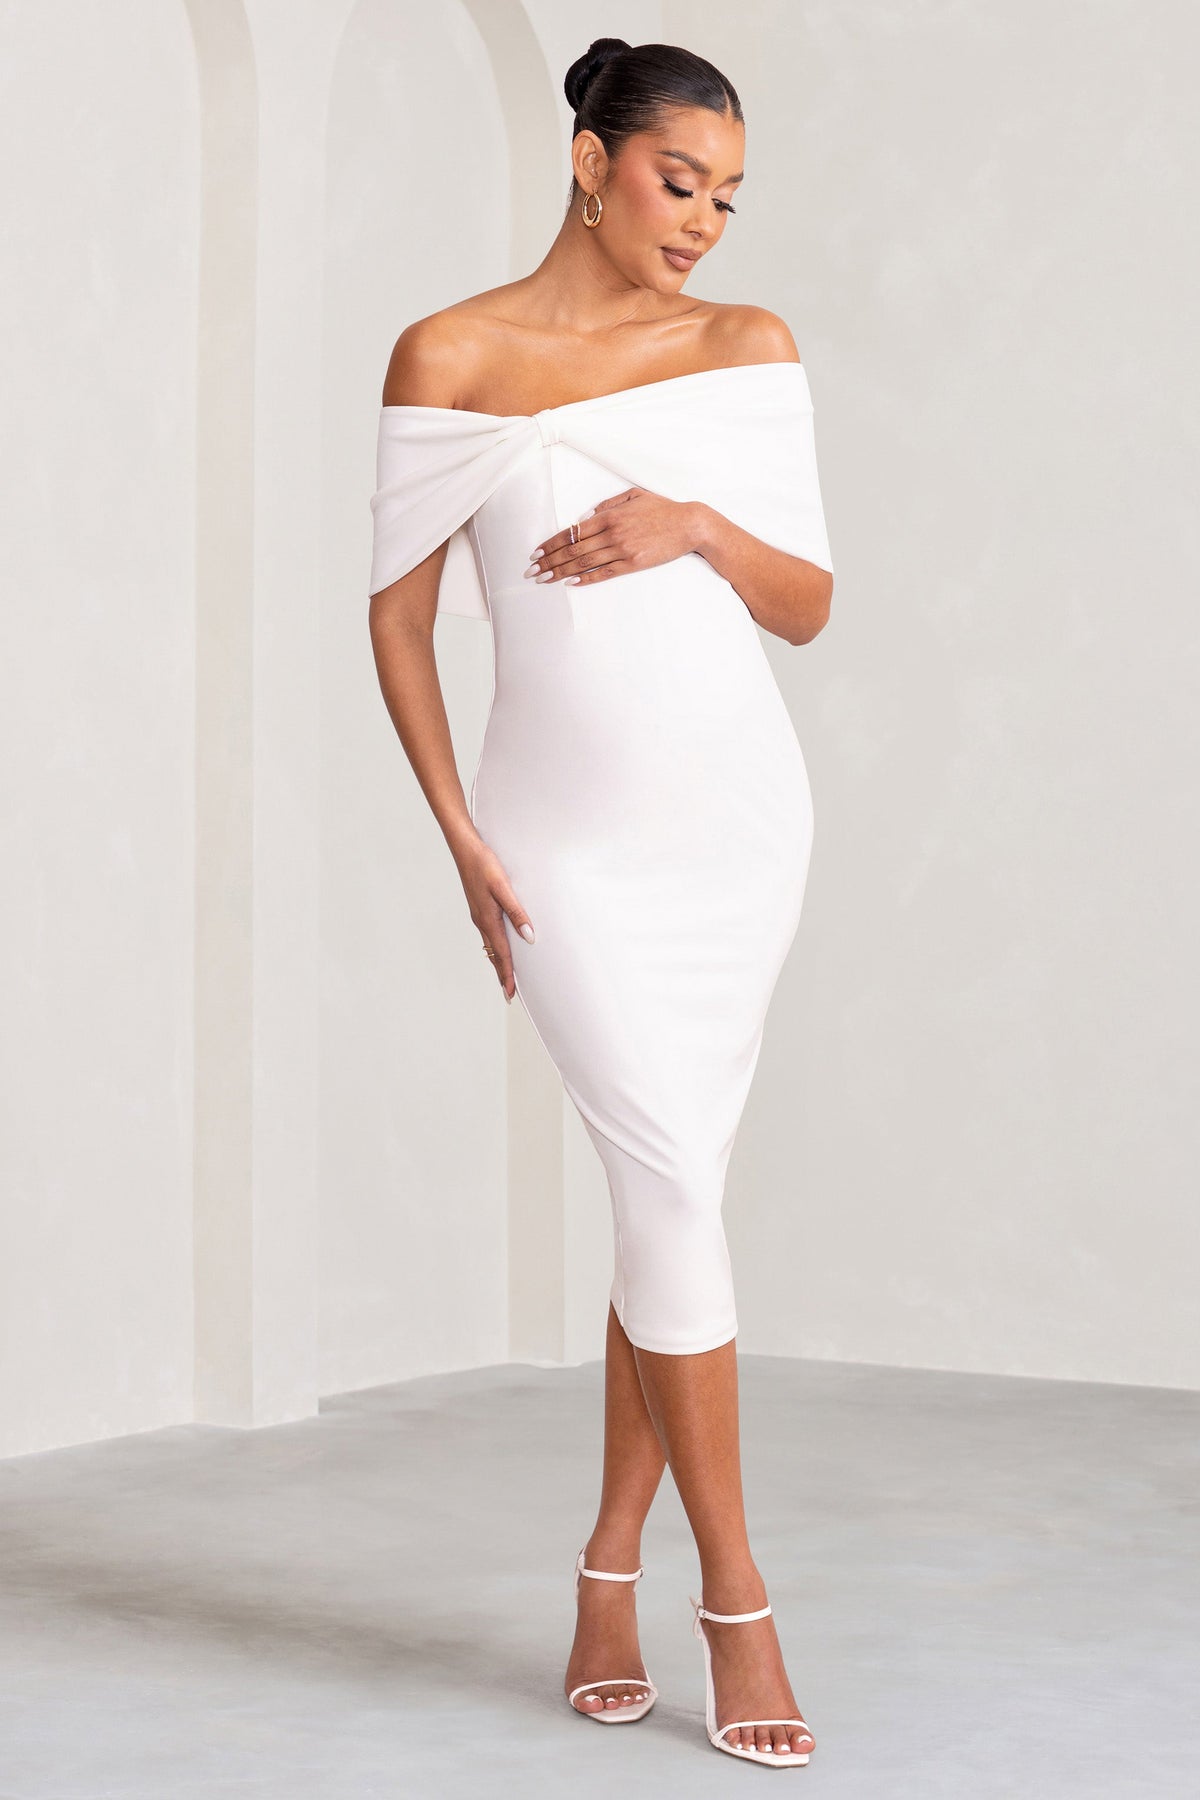 White Bardot Bodysuit for Pregnancy Photos – Chic Bump Club